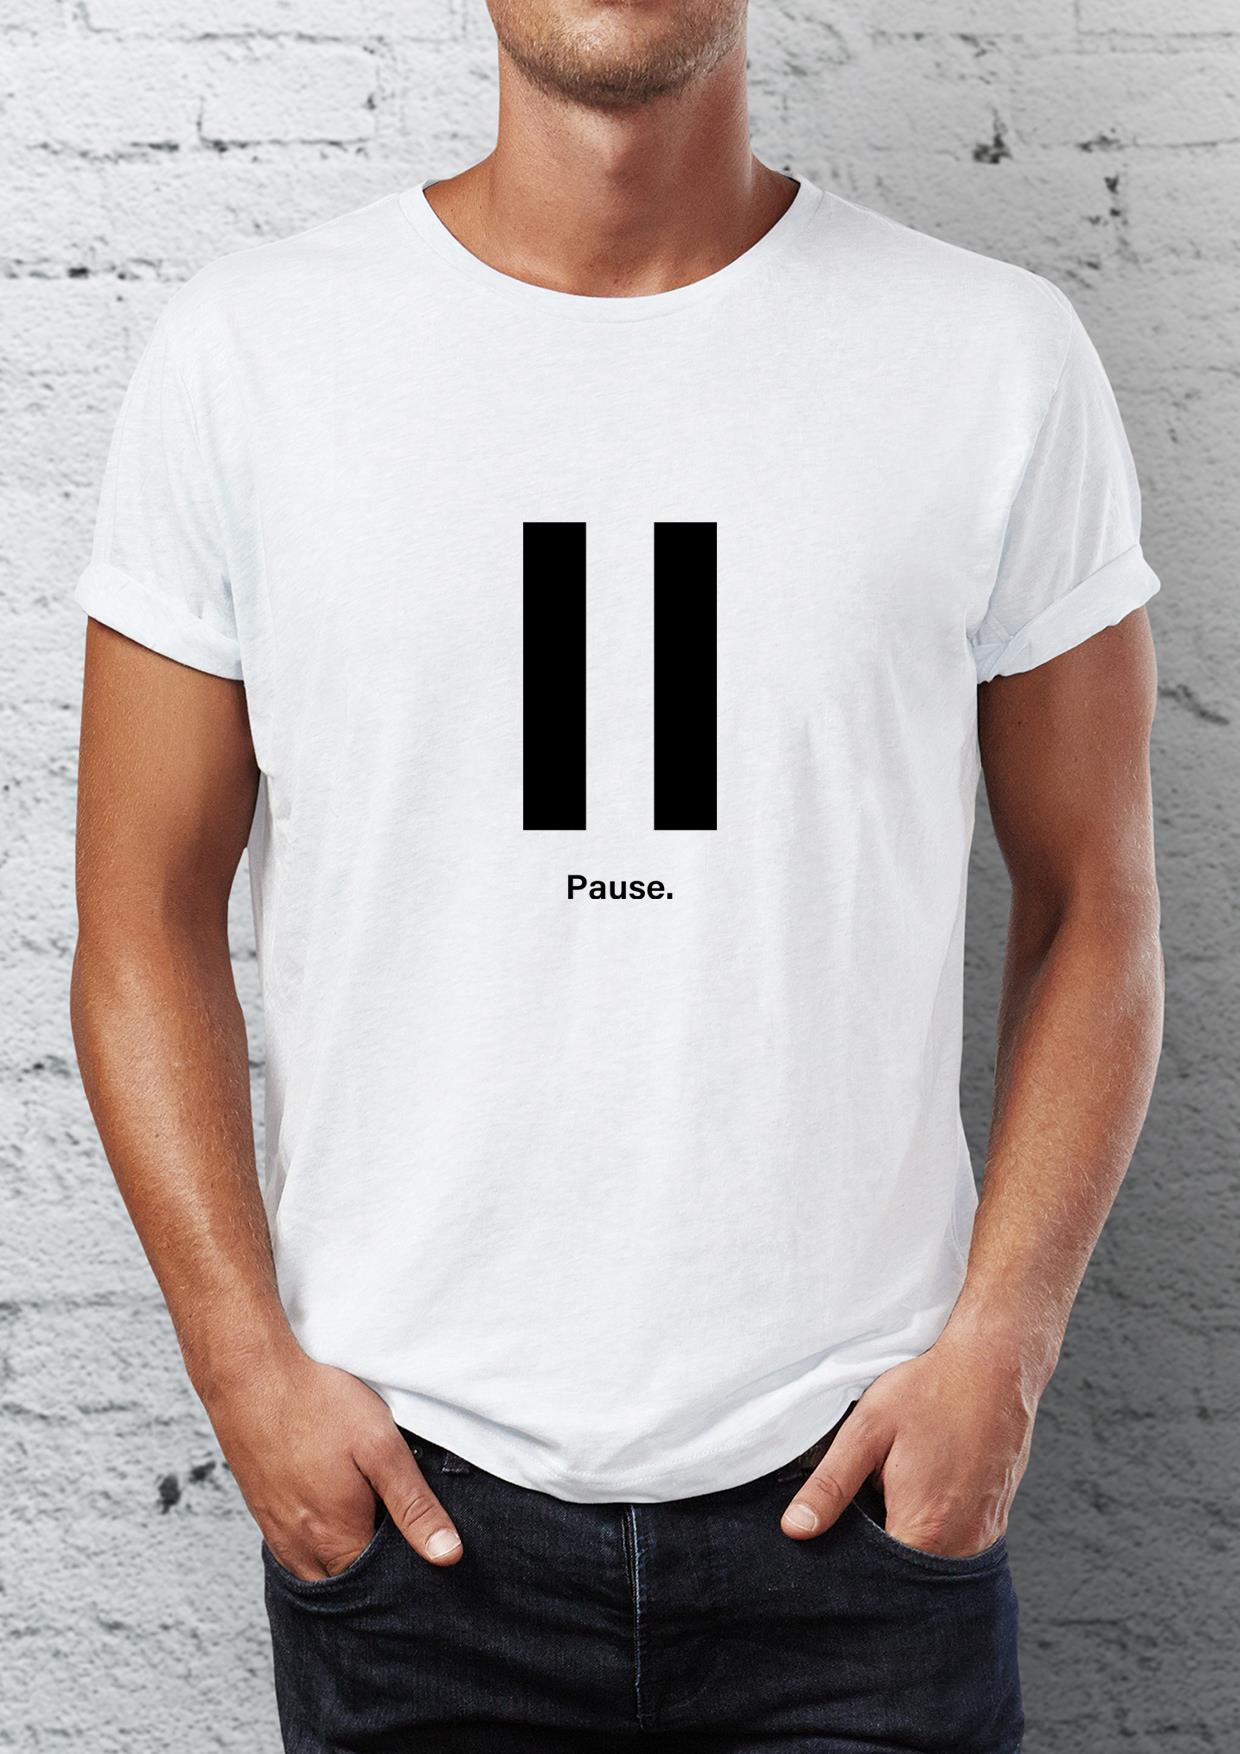 Pause Slogan Graphic Printed Bike Crew Neck Men's T -shirt